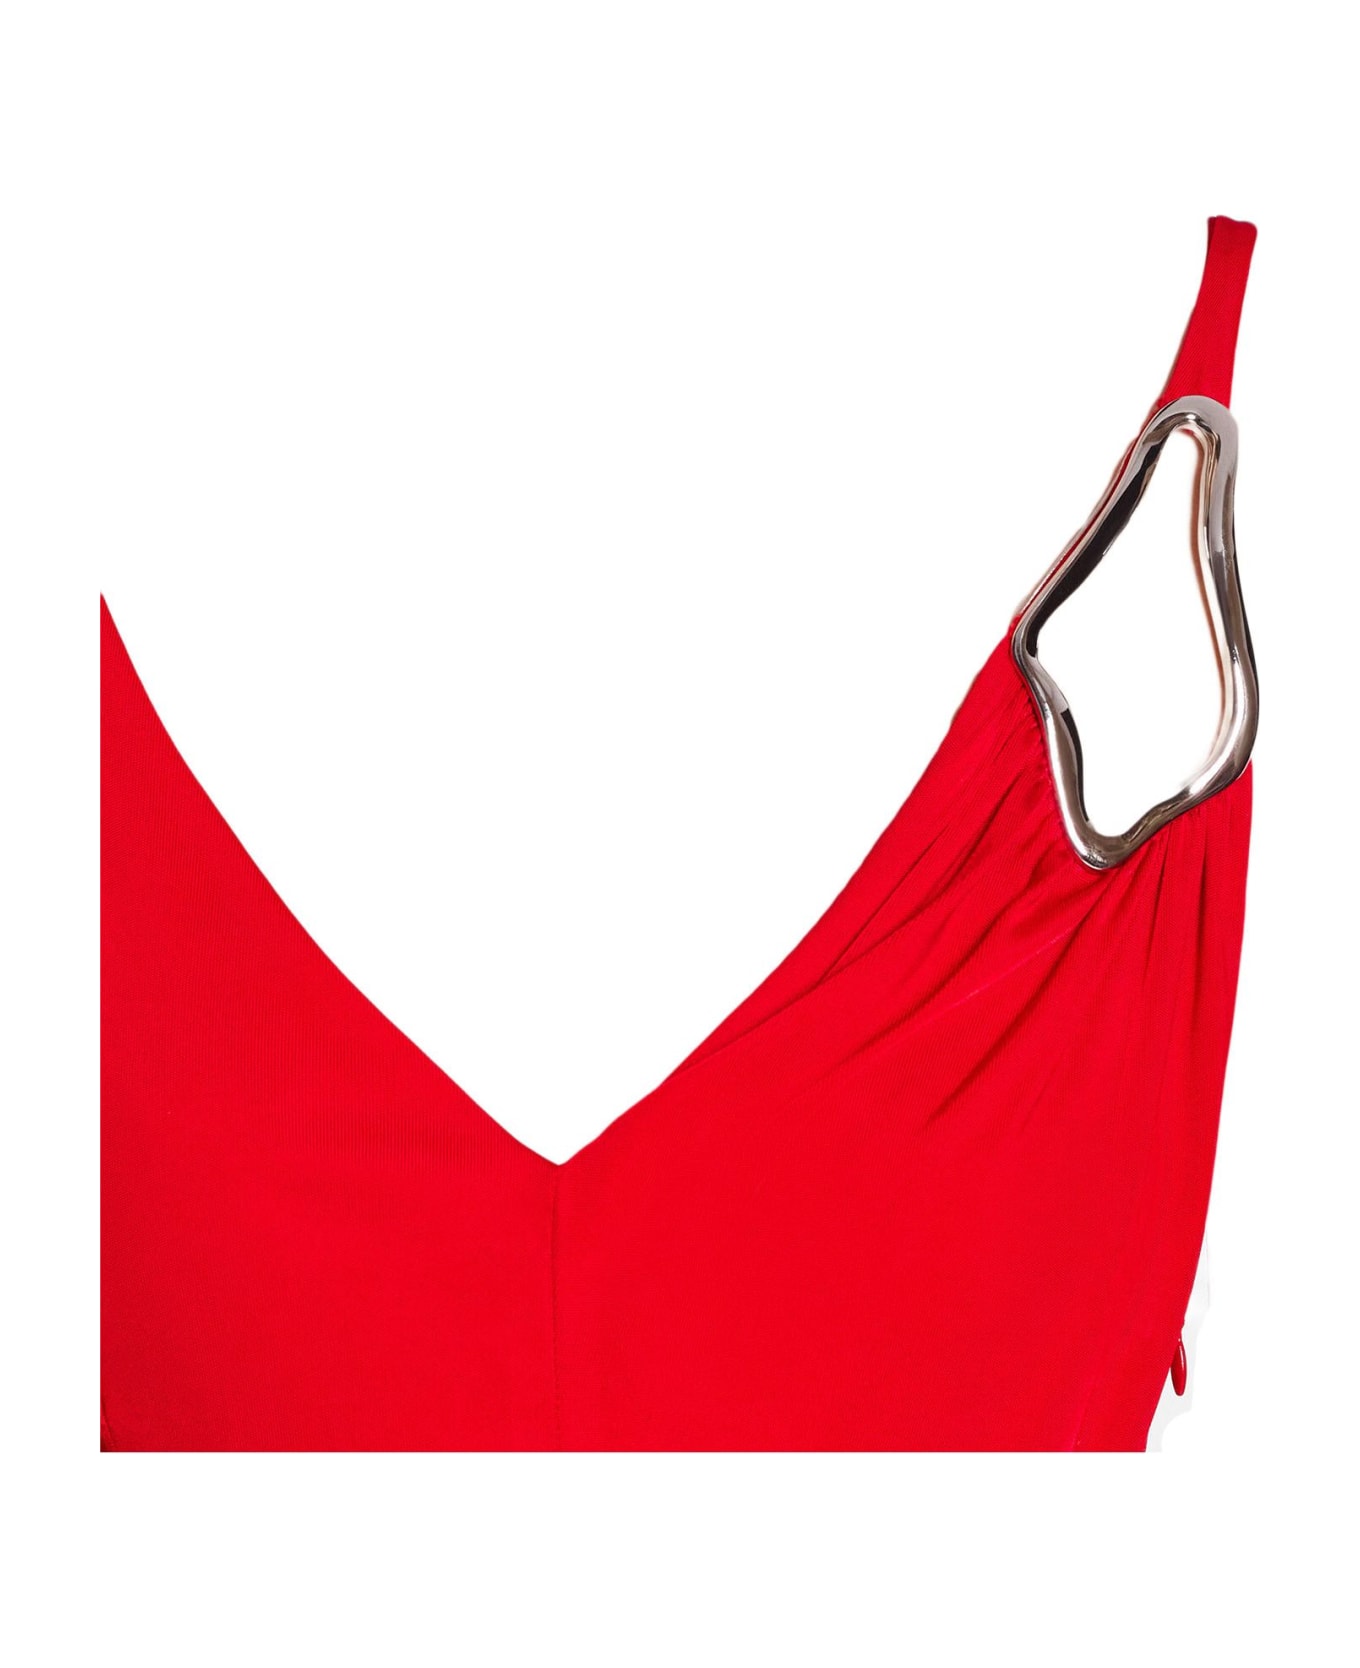 Lanvin Sleeveless A-line Midi Dress In Viscose - Red